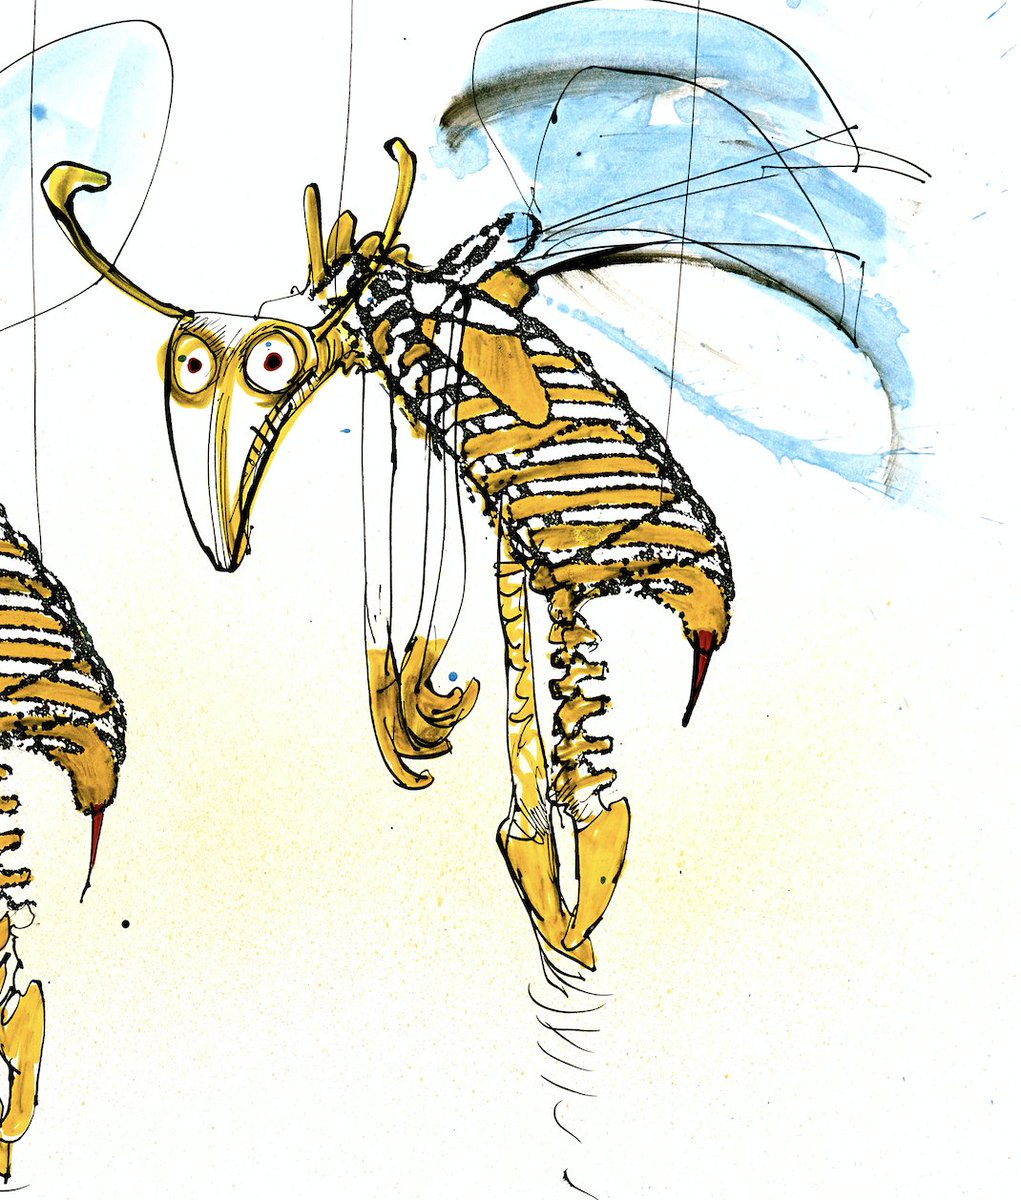 Don't worry, Bee happy! #BeeHappyWeek #RalphSteadman #Illustration